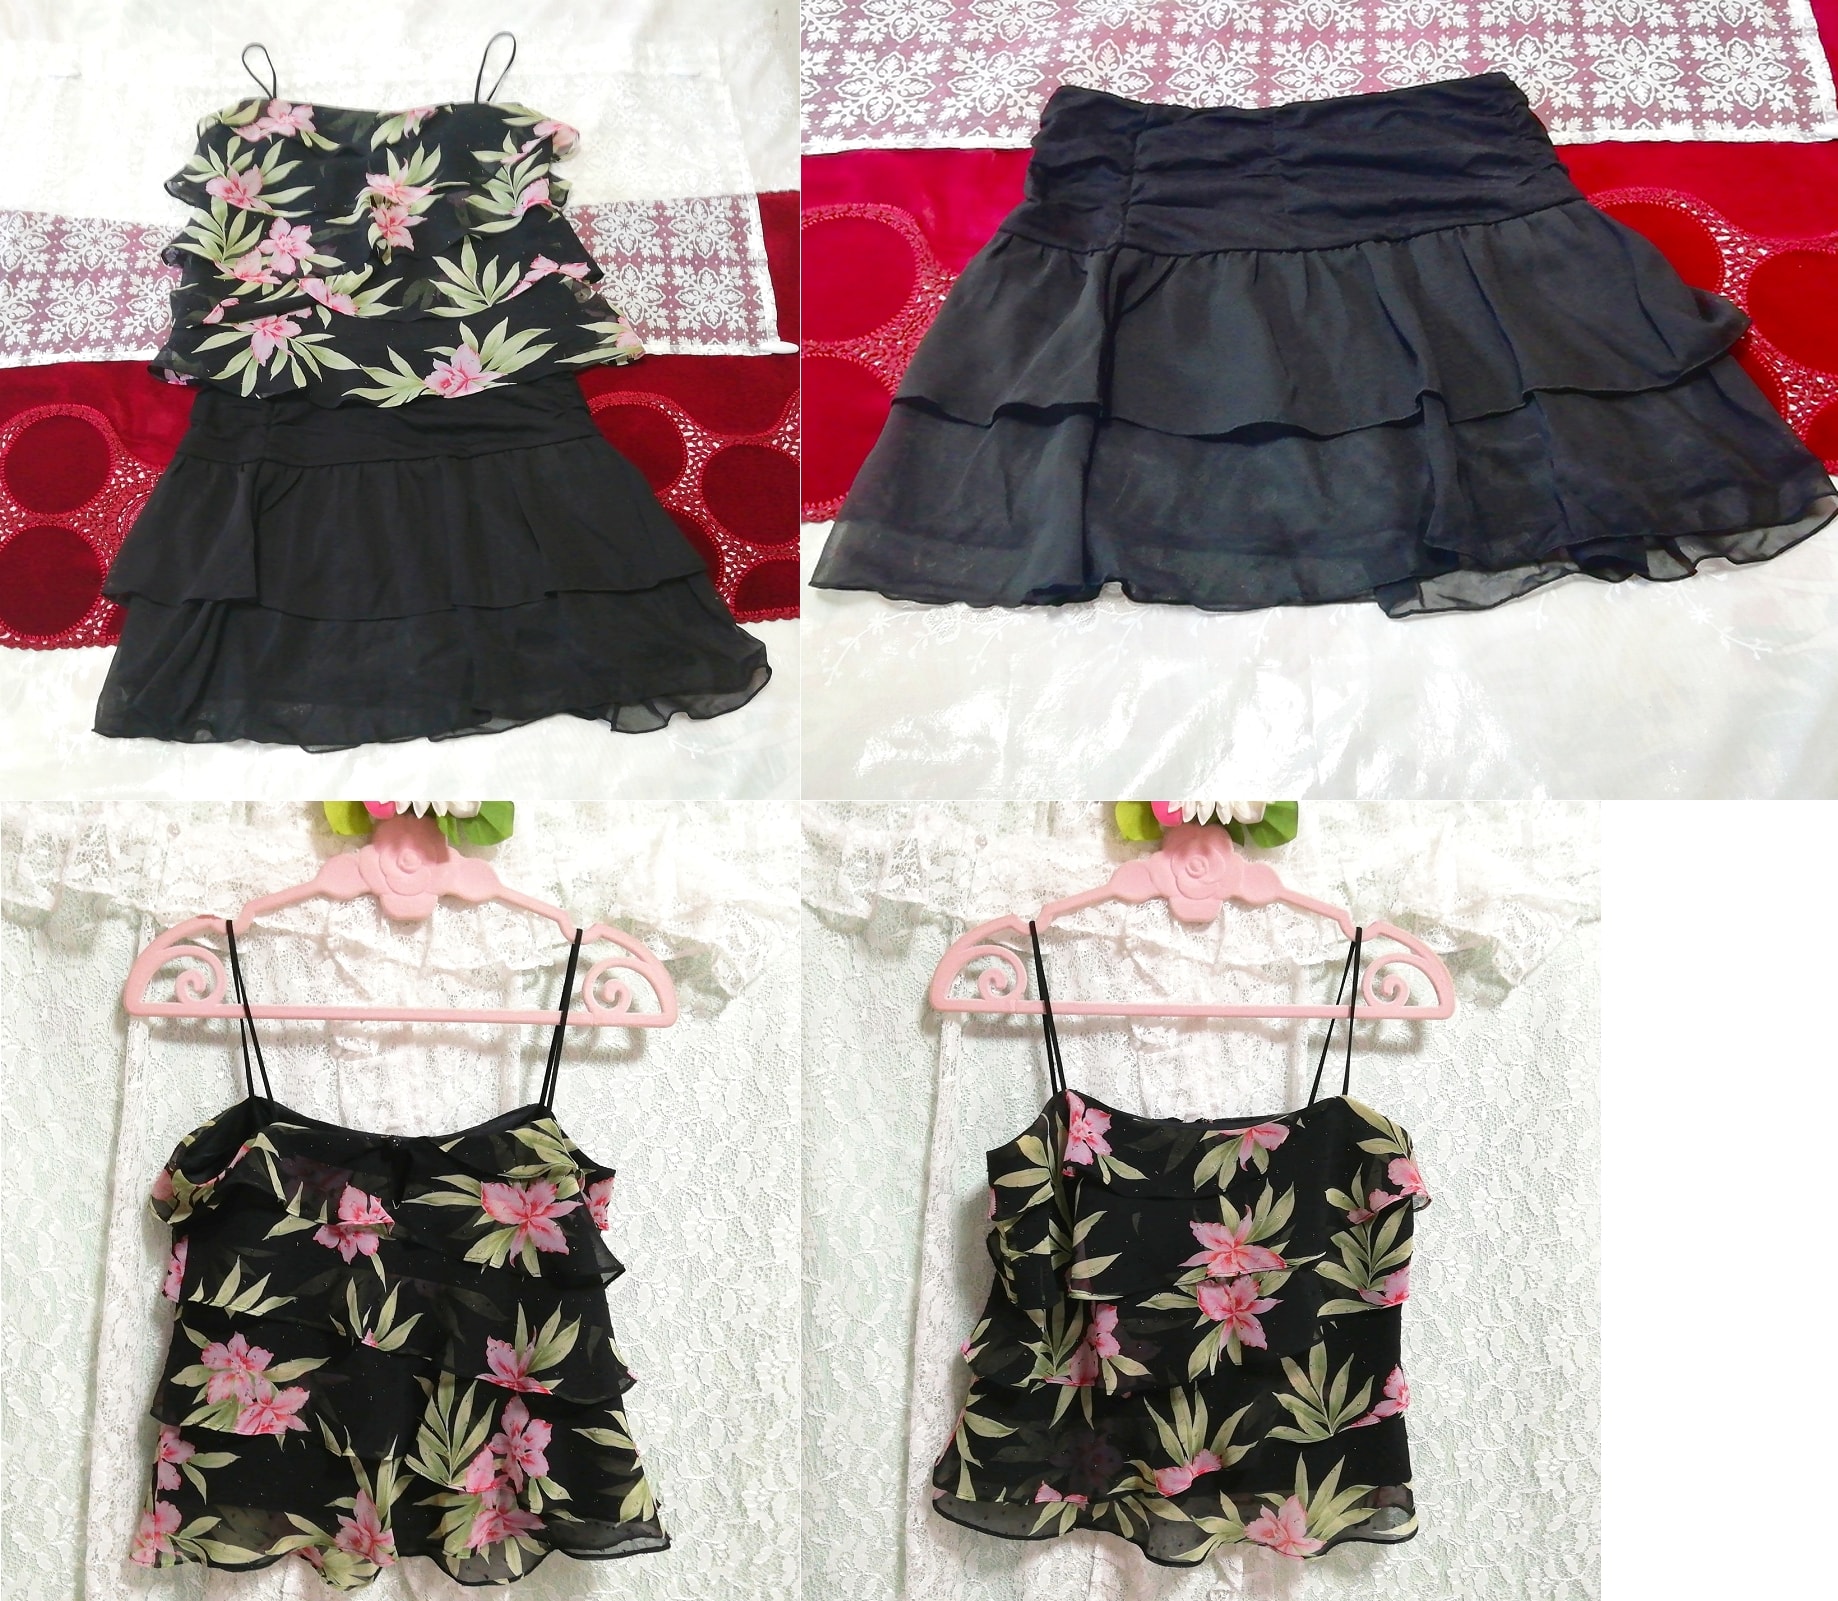 Black floral pattern frill chiffon camisole negligee nightgown black frill miniskirt 2P, fashion, ladies' fashion, nightwear, pajamas